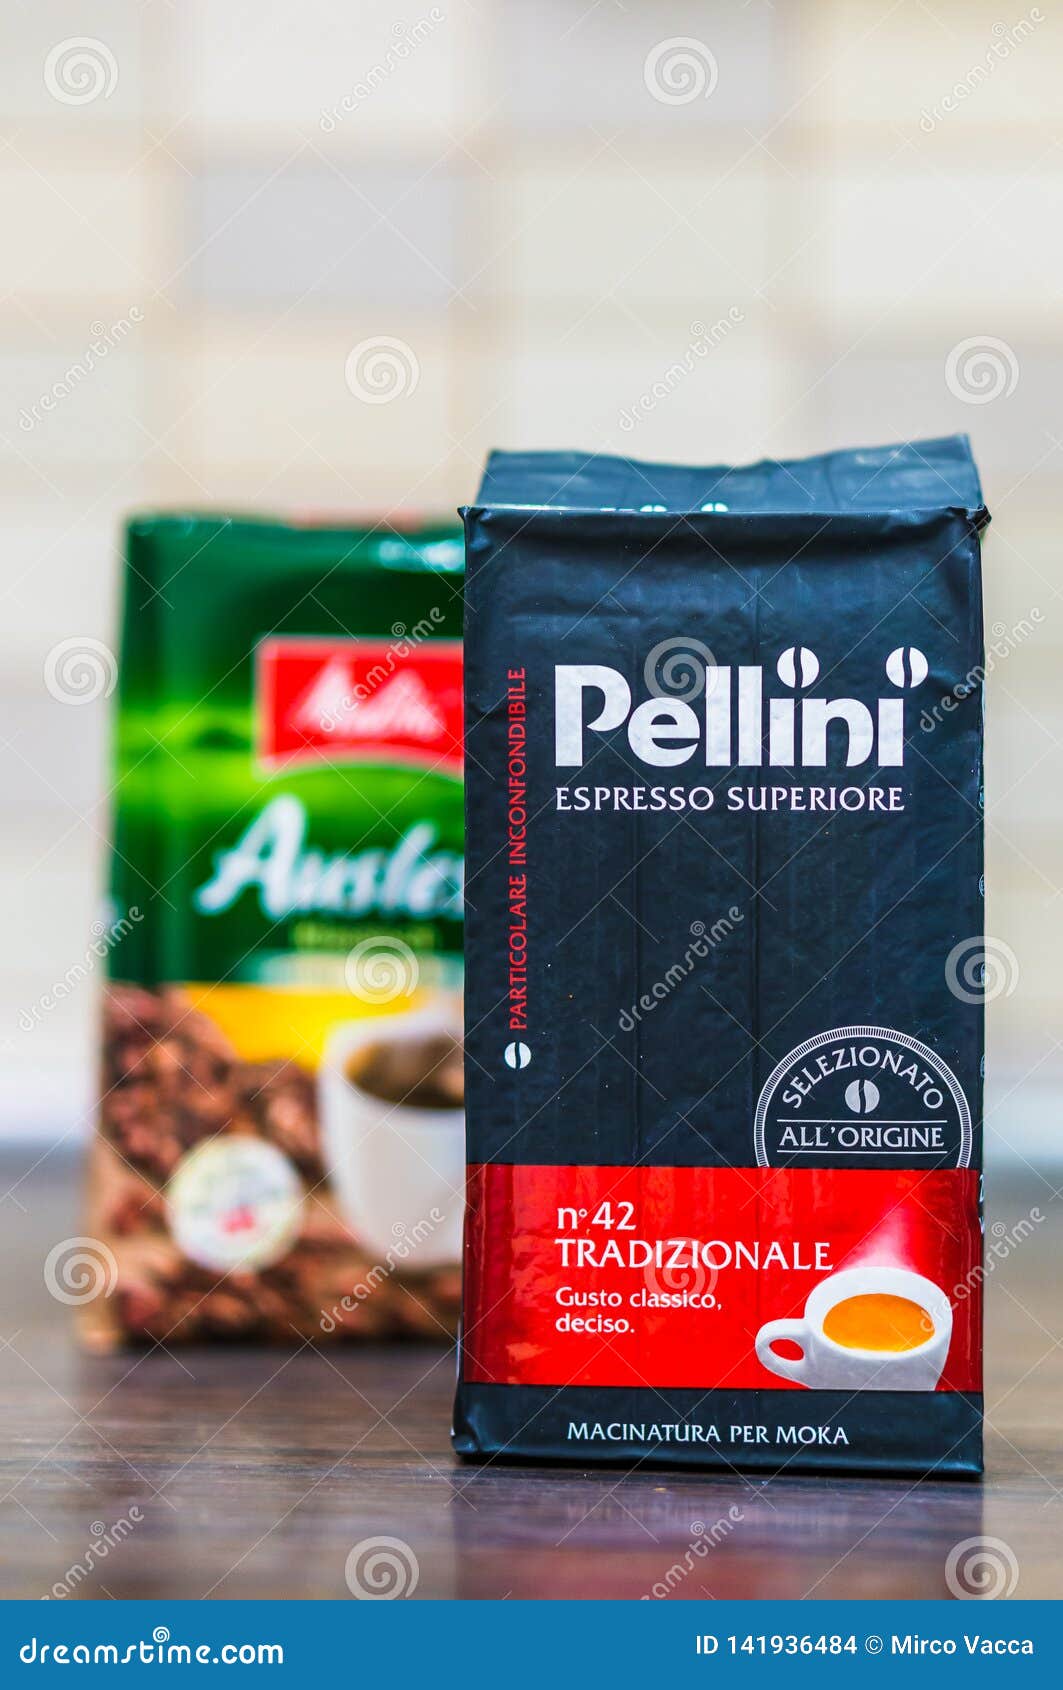 Pellini coffee editorial stock image. Image of italian - 141936484